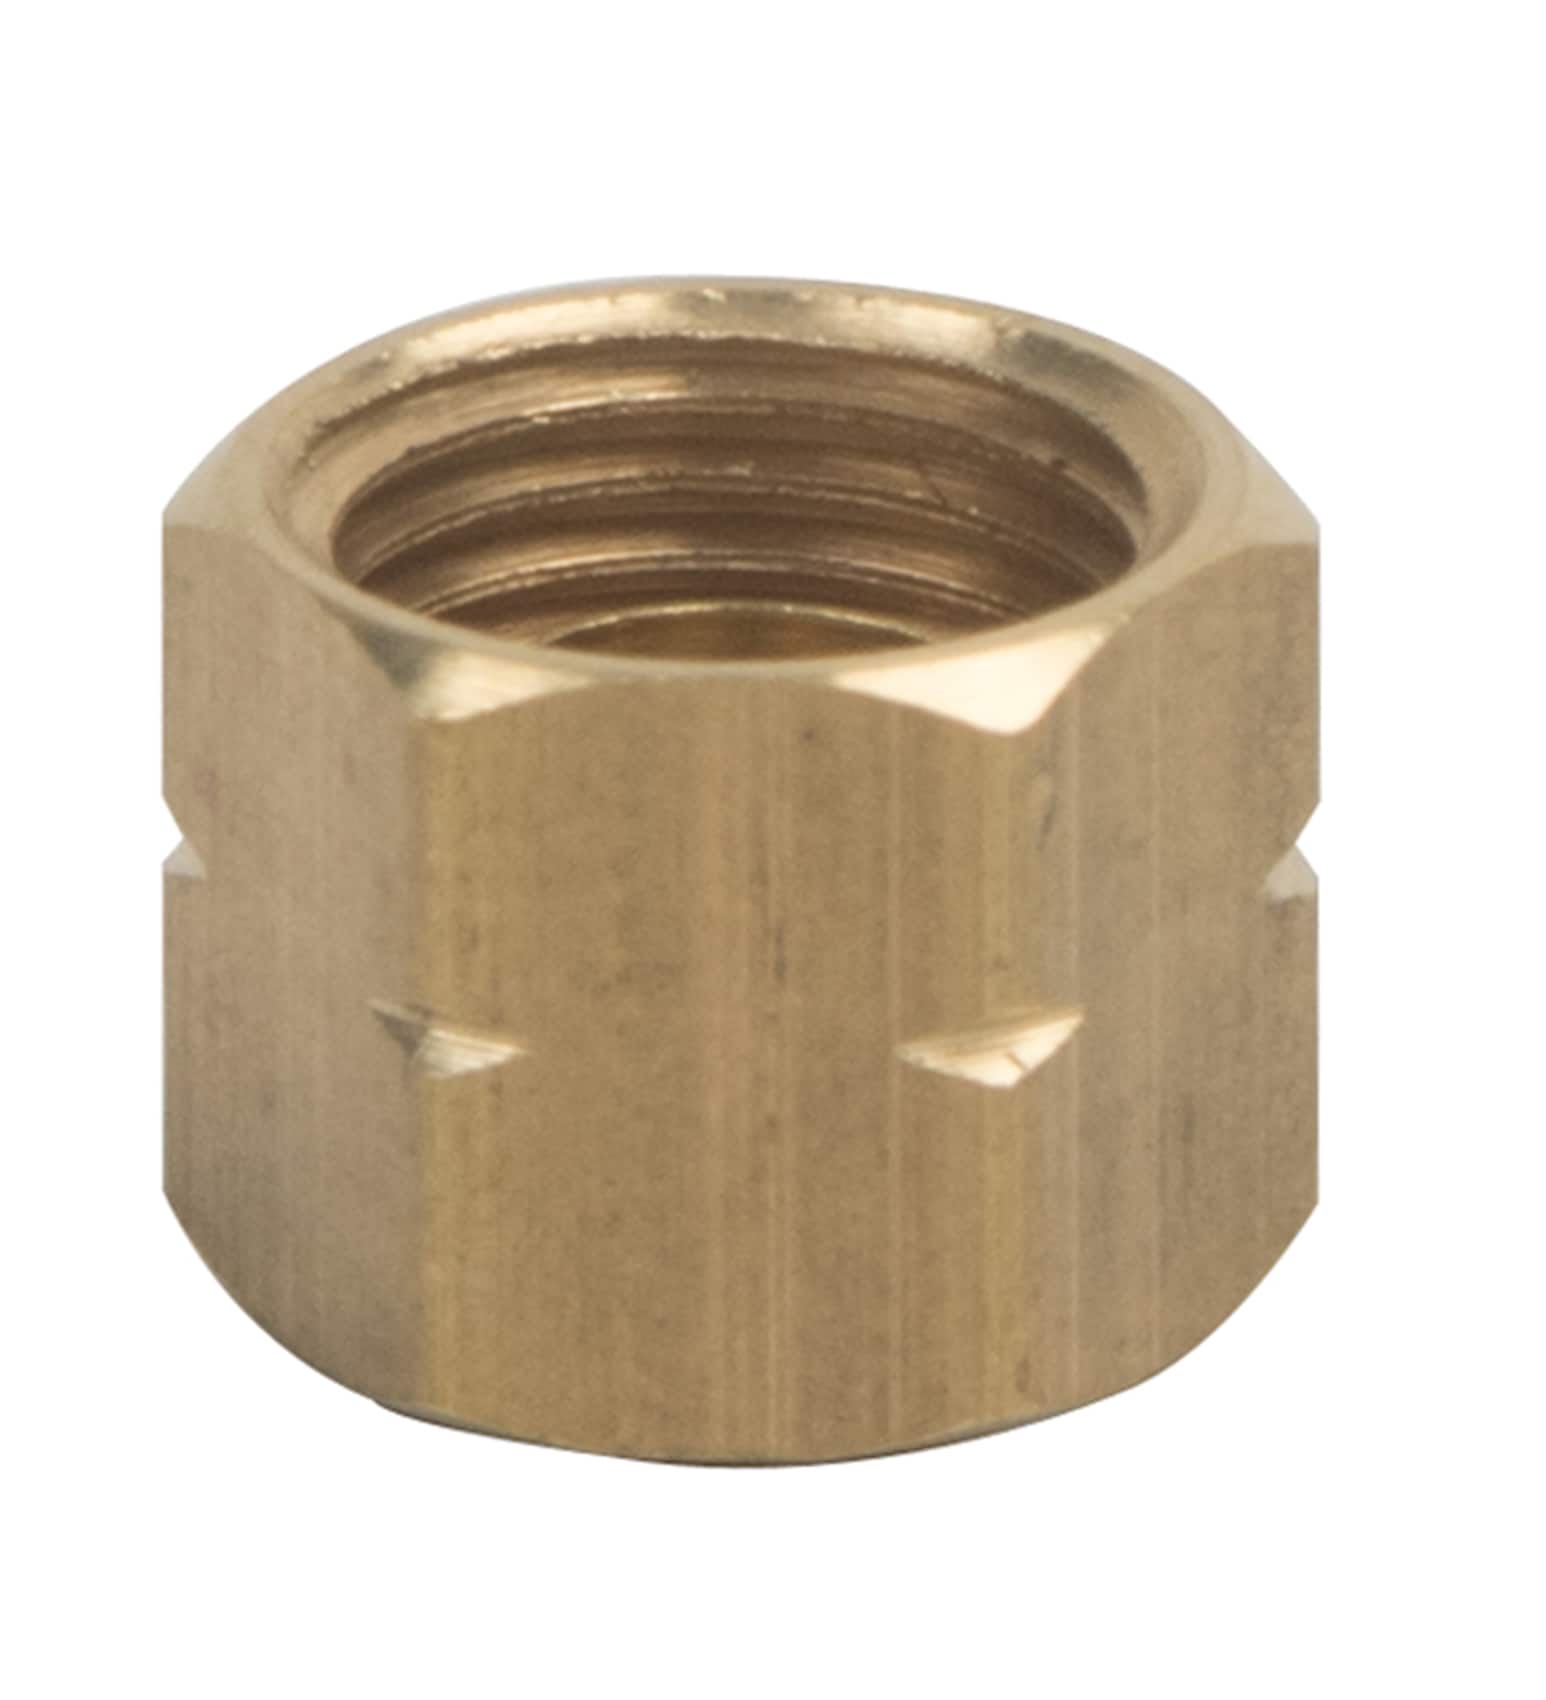 4 pieces Brass 1/4 Line Compression Fitting Union Steel Copper Nylon  Plastic